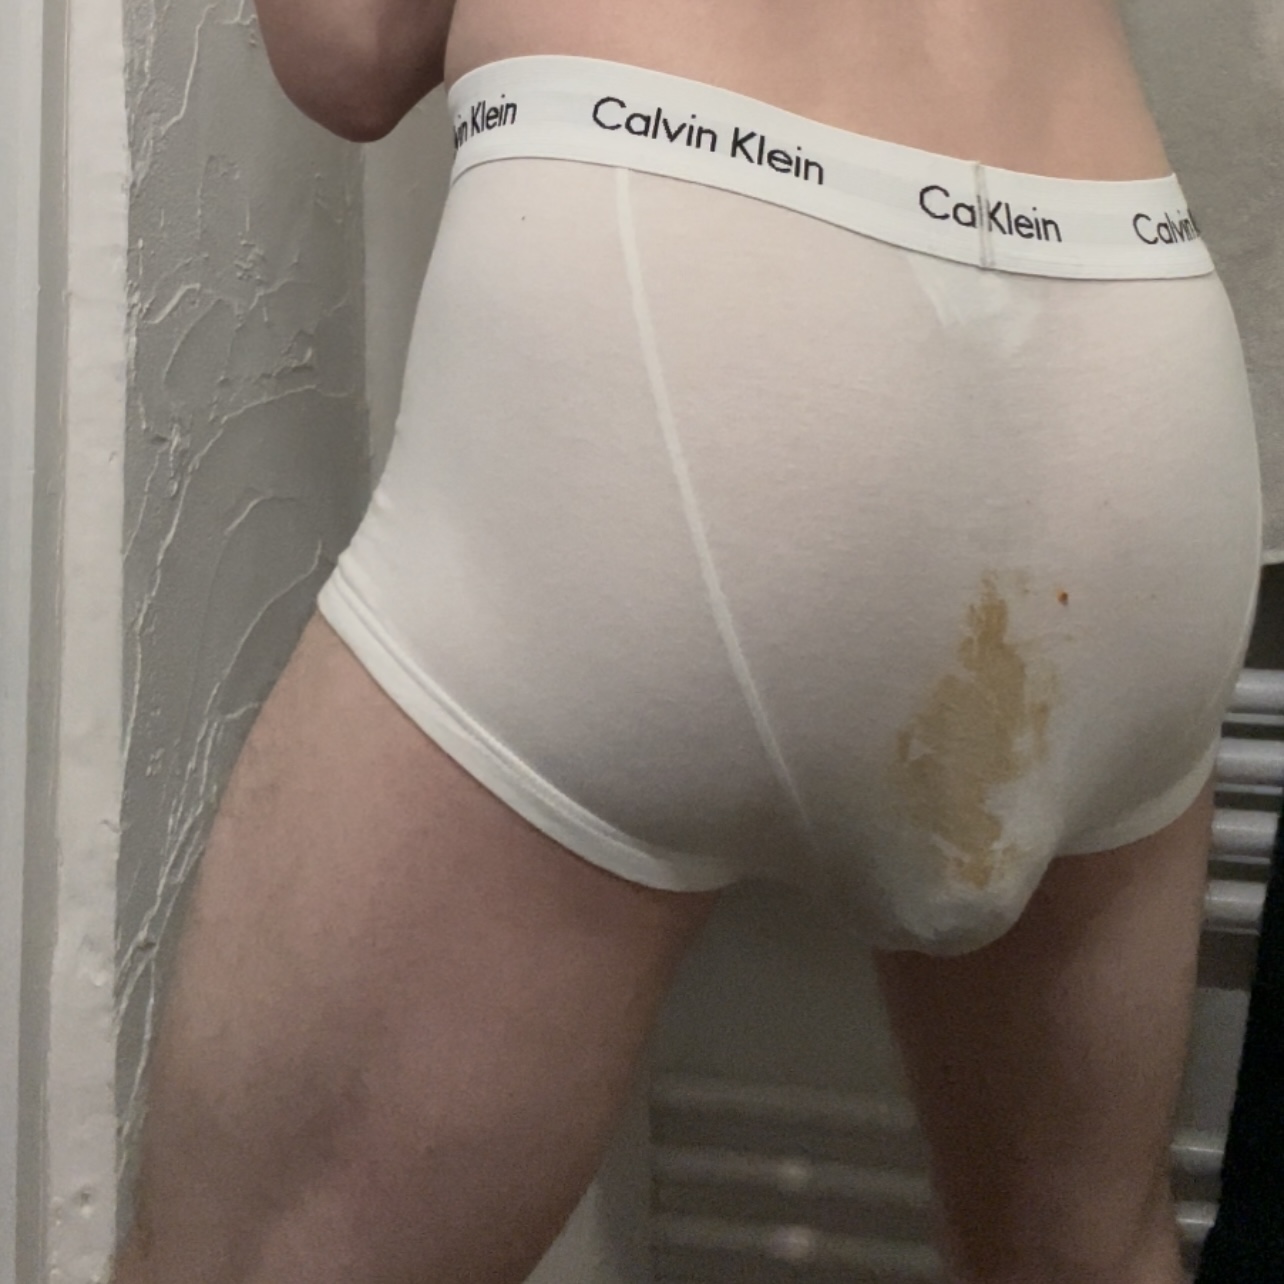 Second poop in white Calvin Klein